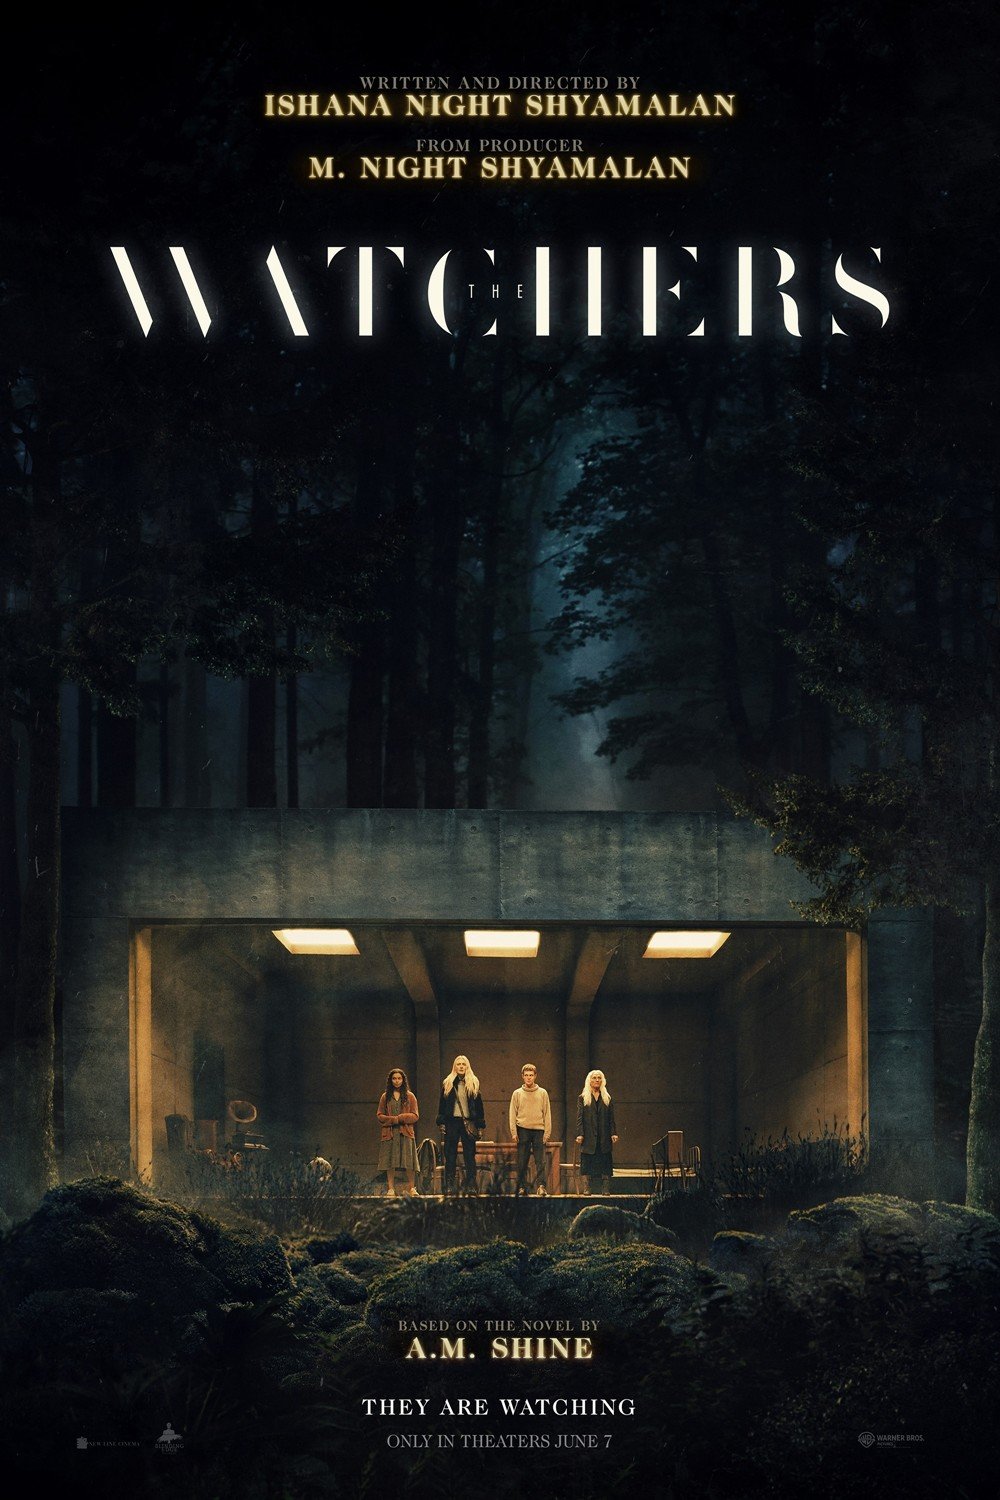 6/14 The Watchers